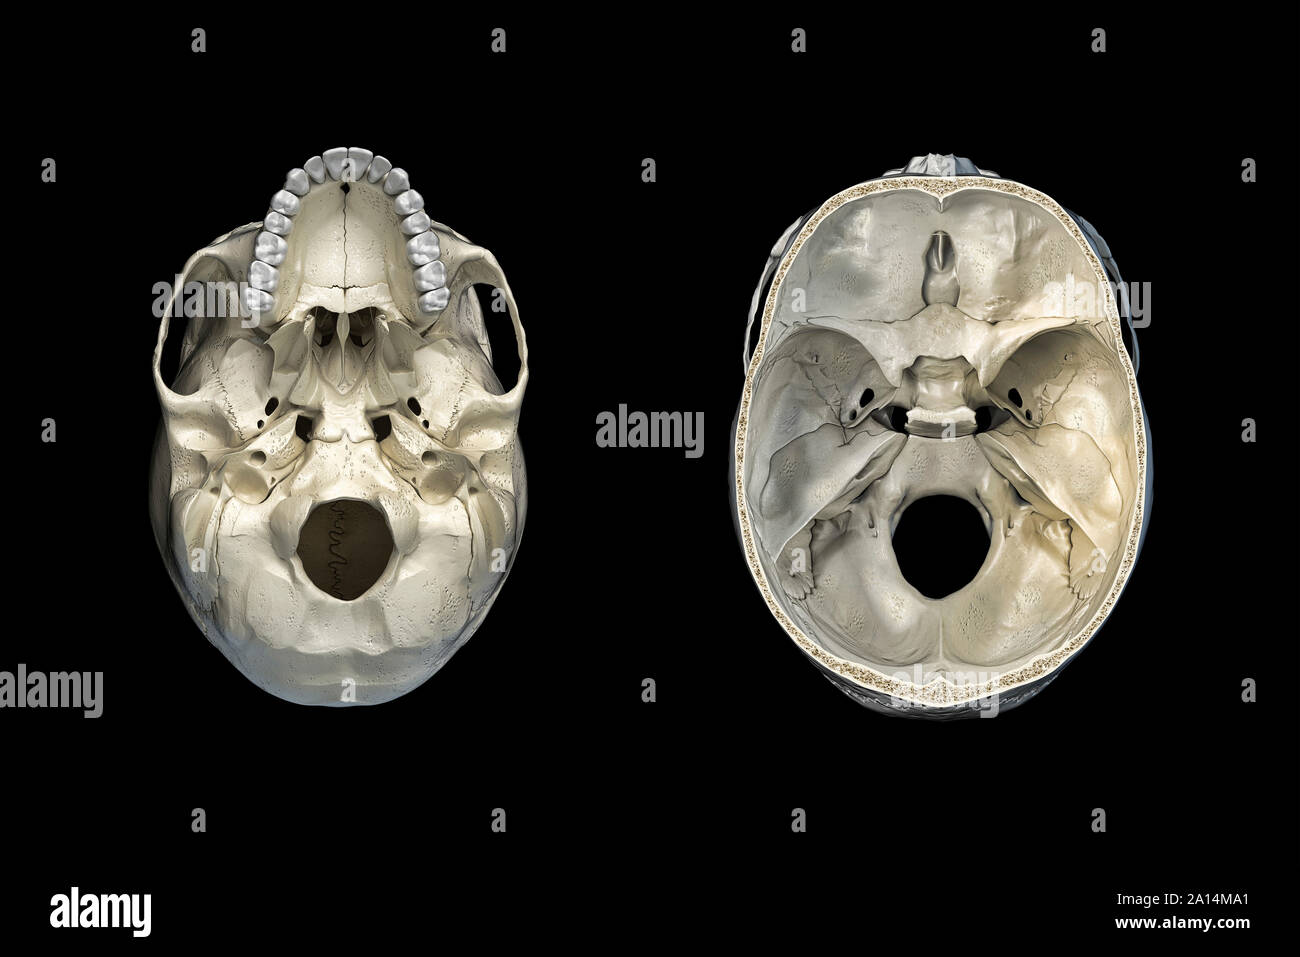 Human skull transversal cross-section and bottom view, Stock Photo